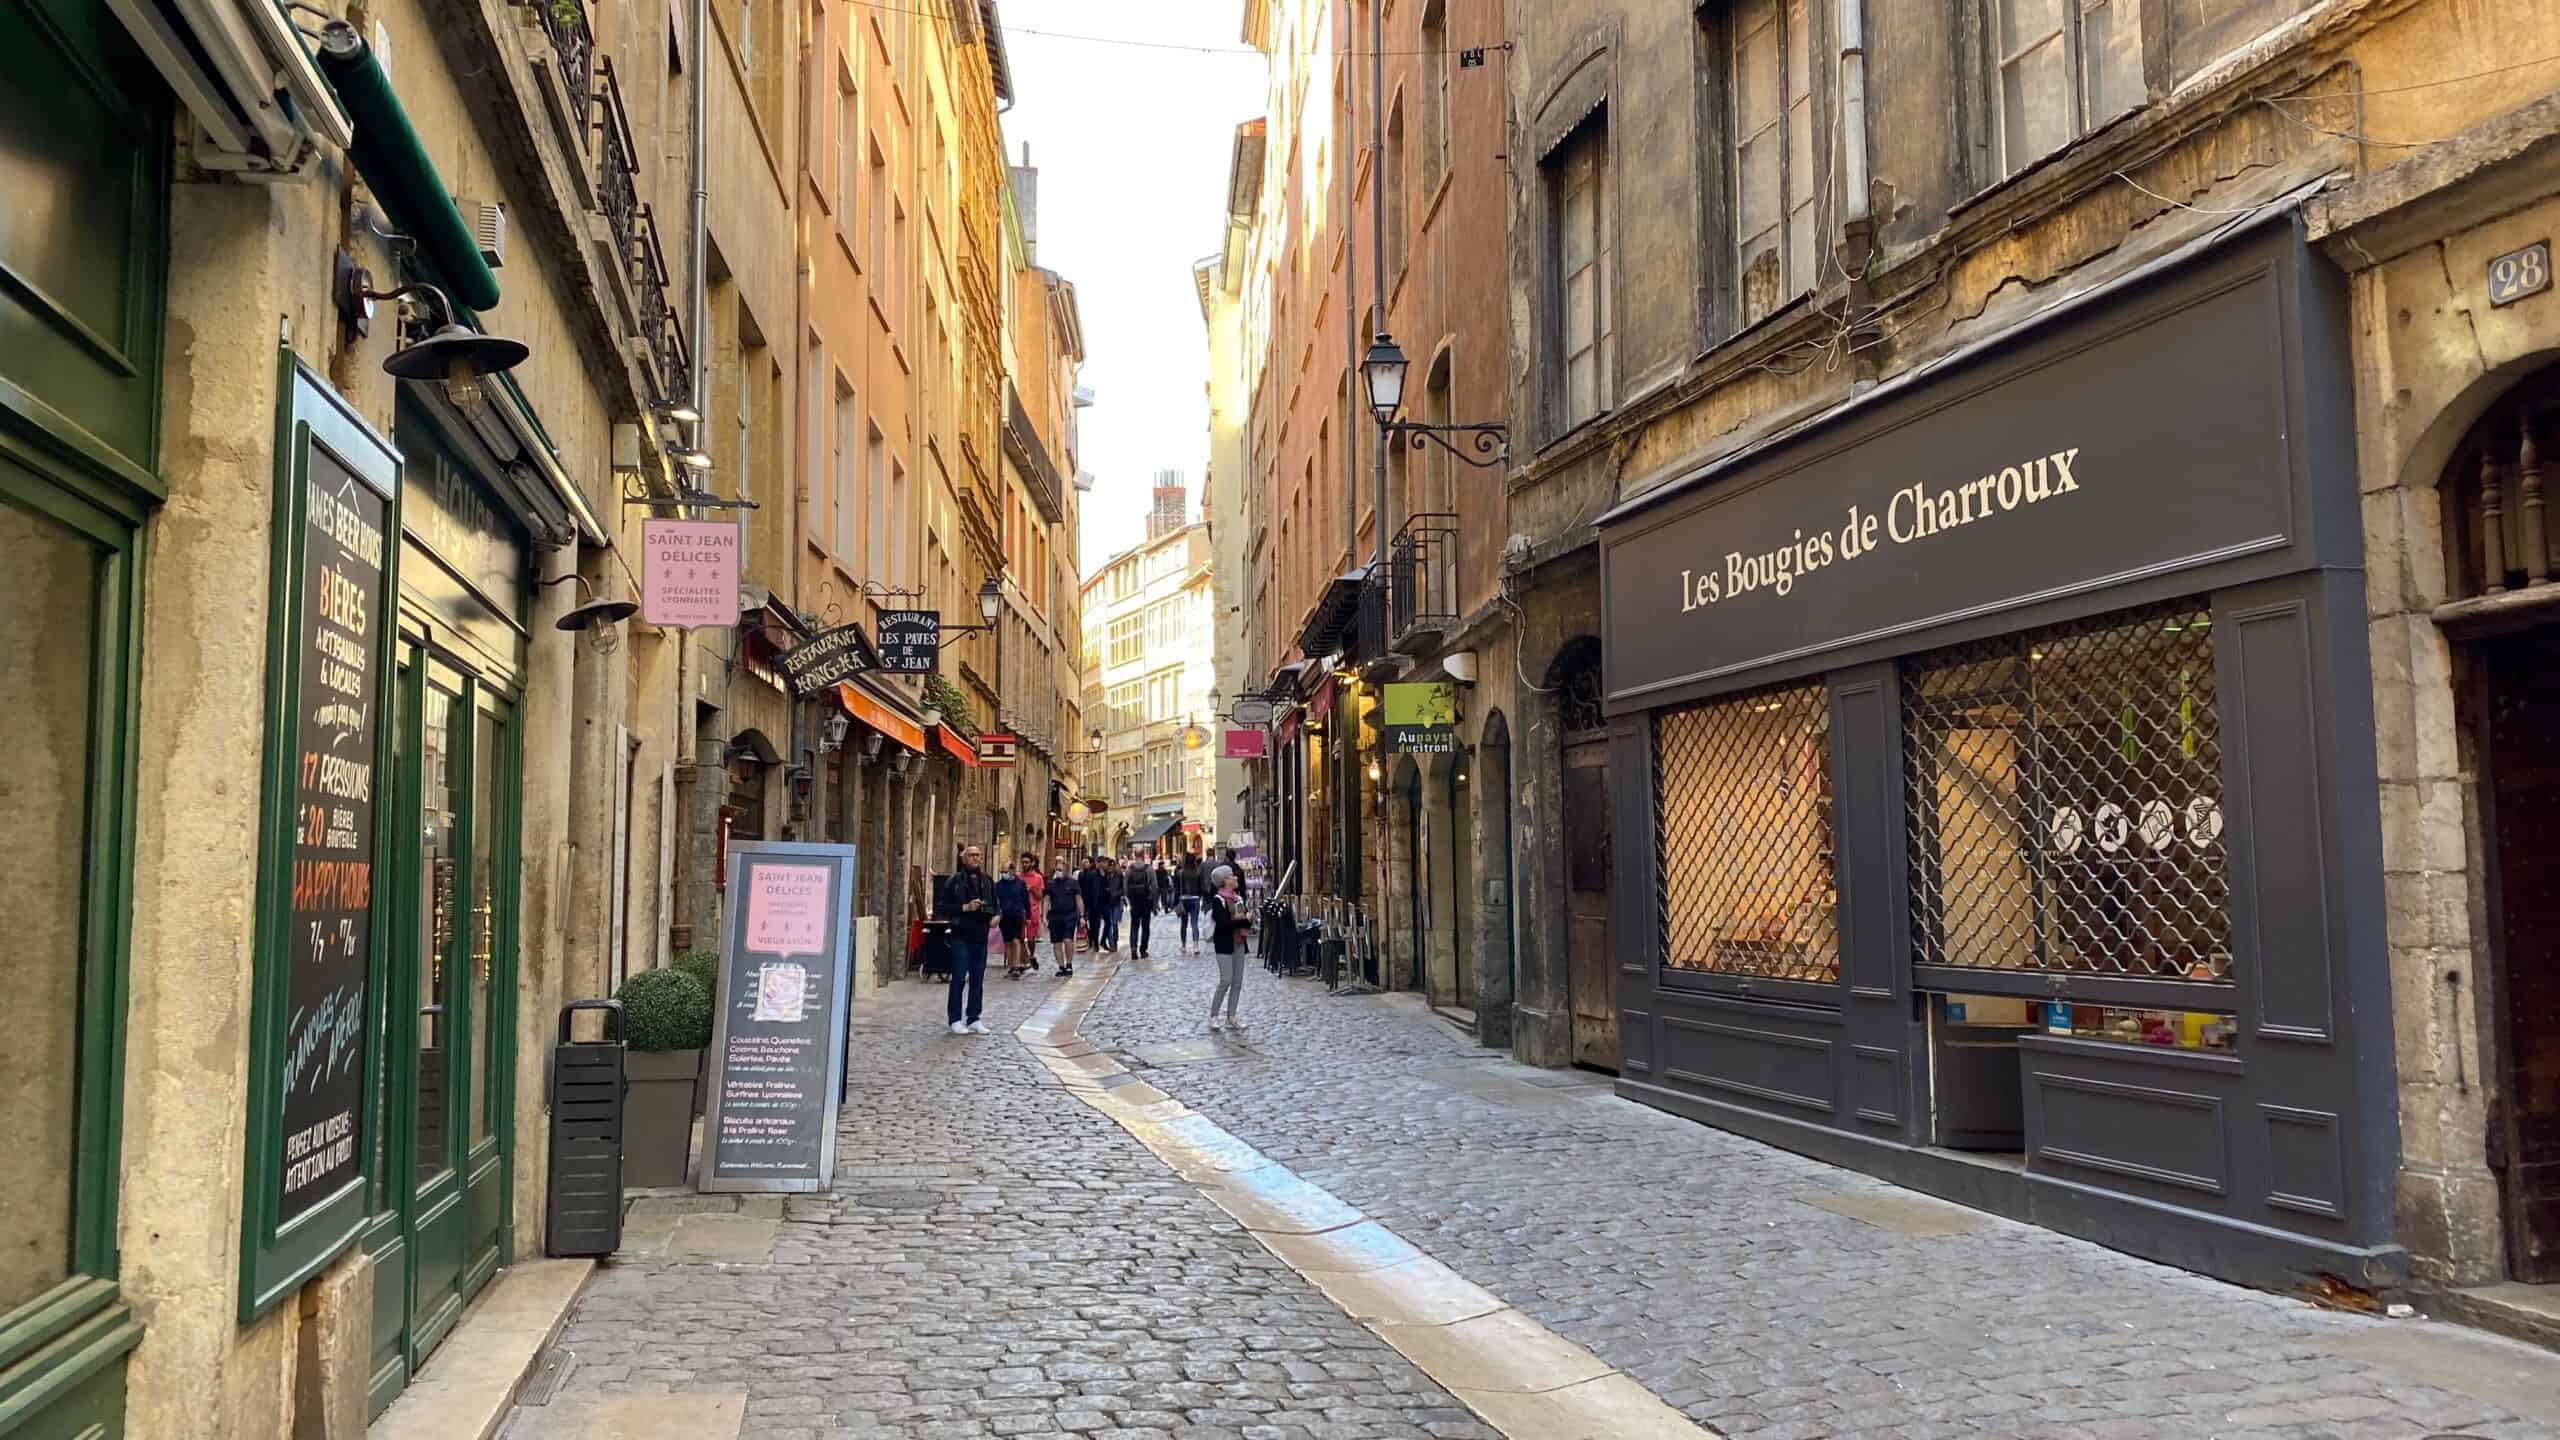 Quaint street in Old Town Lyon